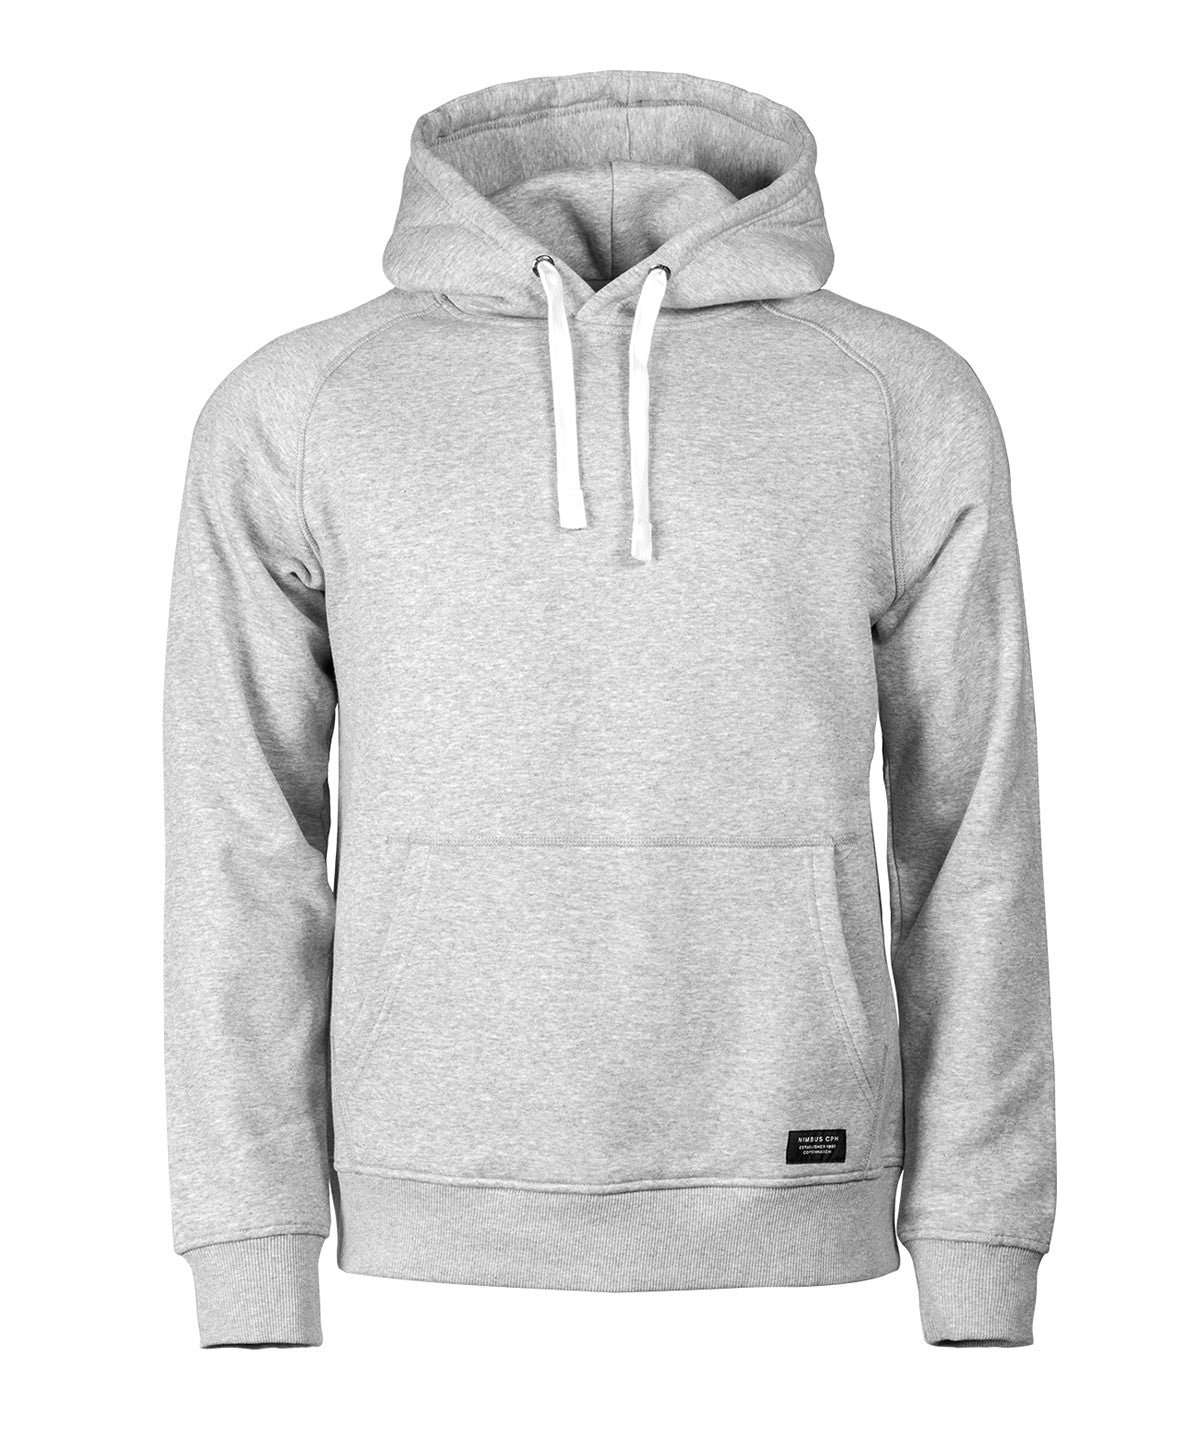 Nimbus Brownsville – fashionable hooded sweatshirt